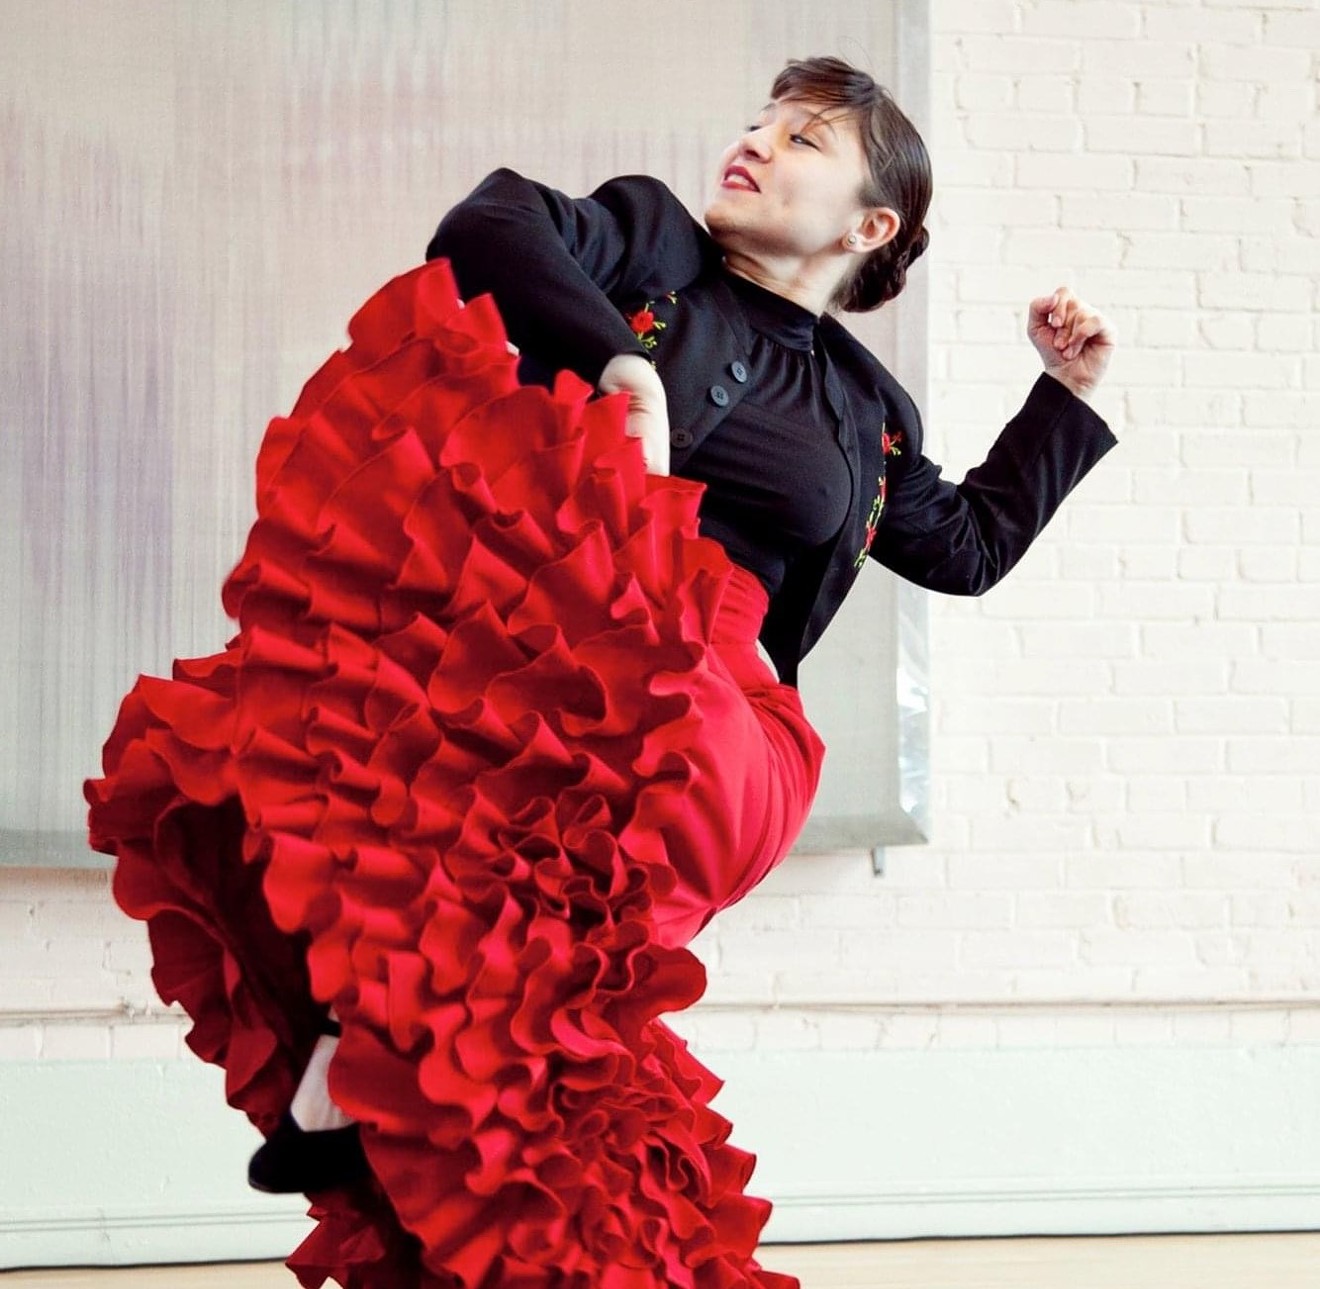 Flamenco dancing will be in plentiful supply at the Cocina Flamenca Live.